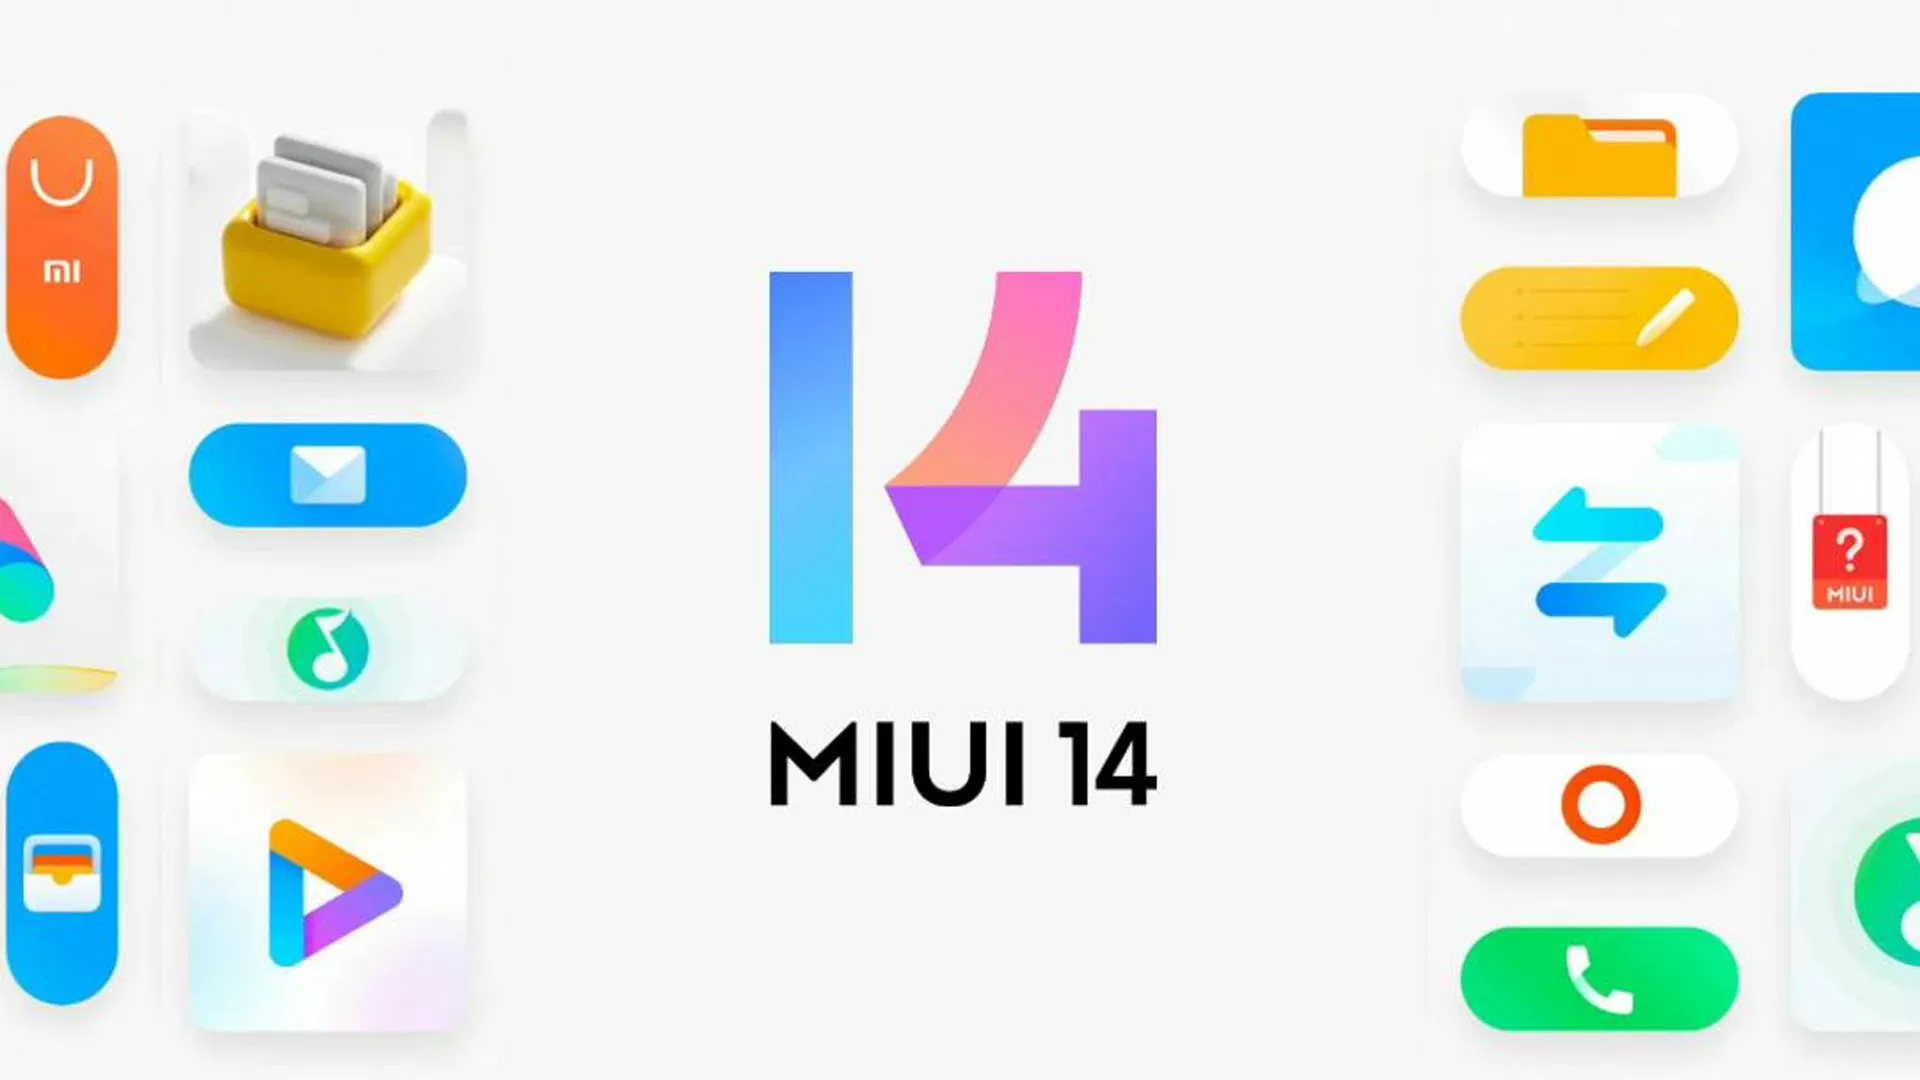 Cinque smartphone Xiaomi hanno ricevuto la versione beta della MIUI 14 su Android 13